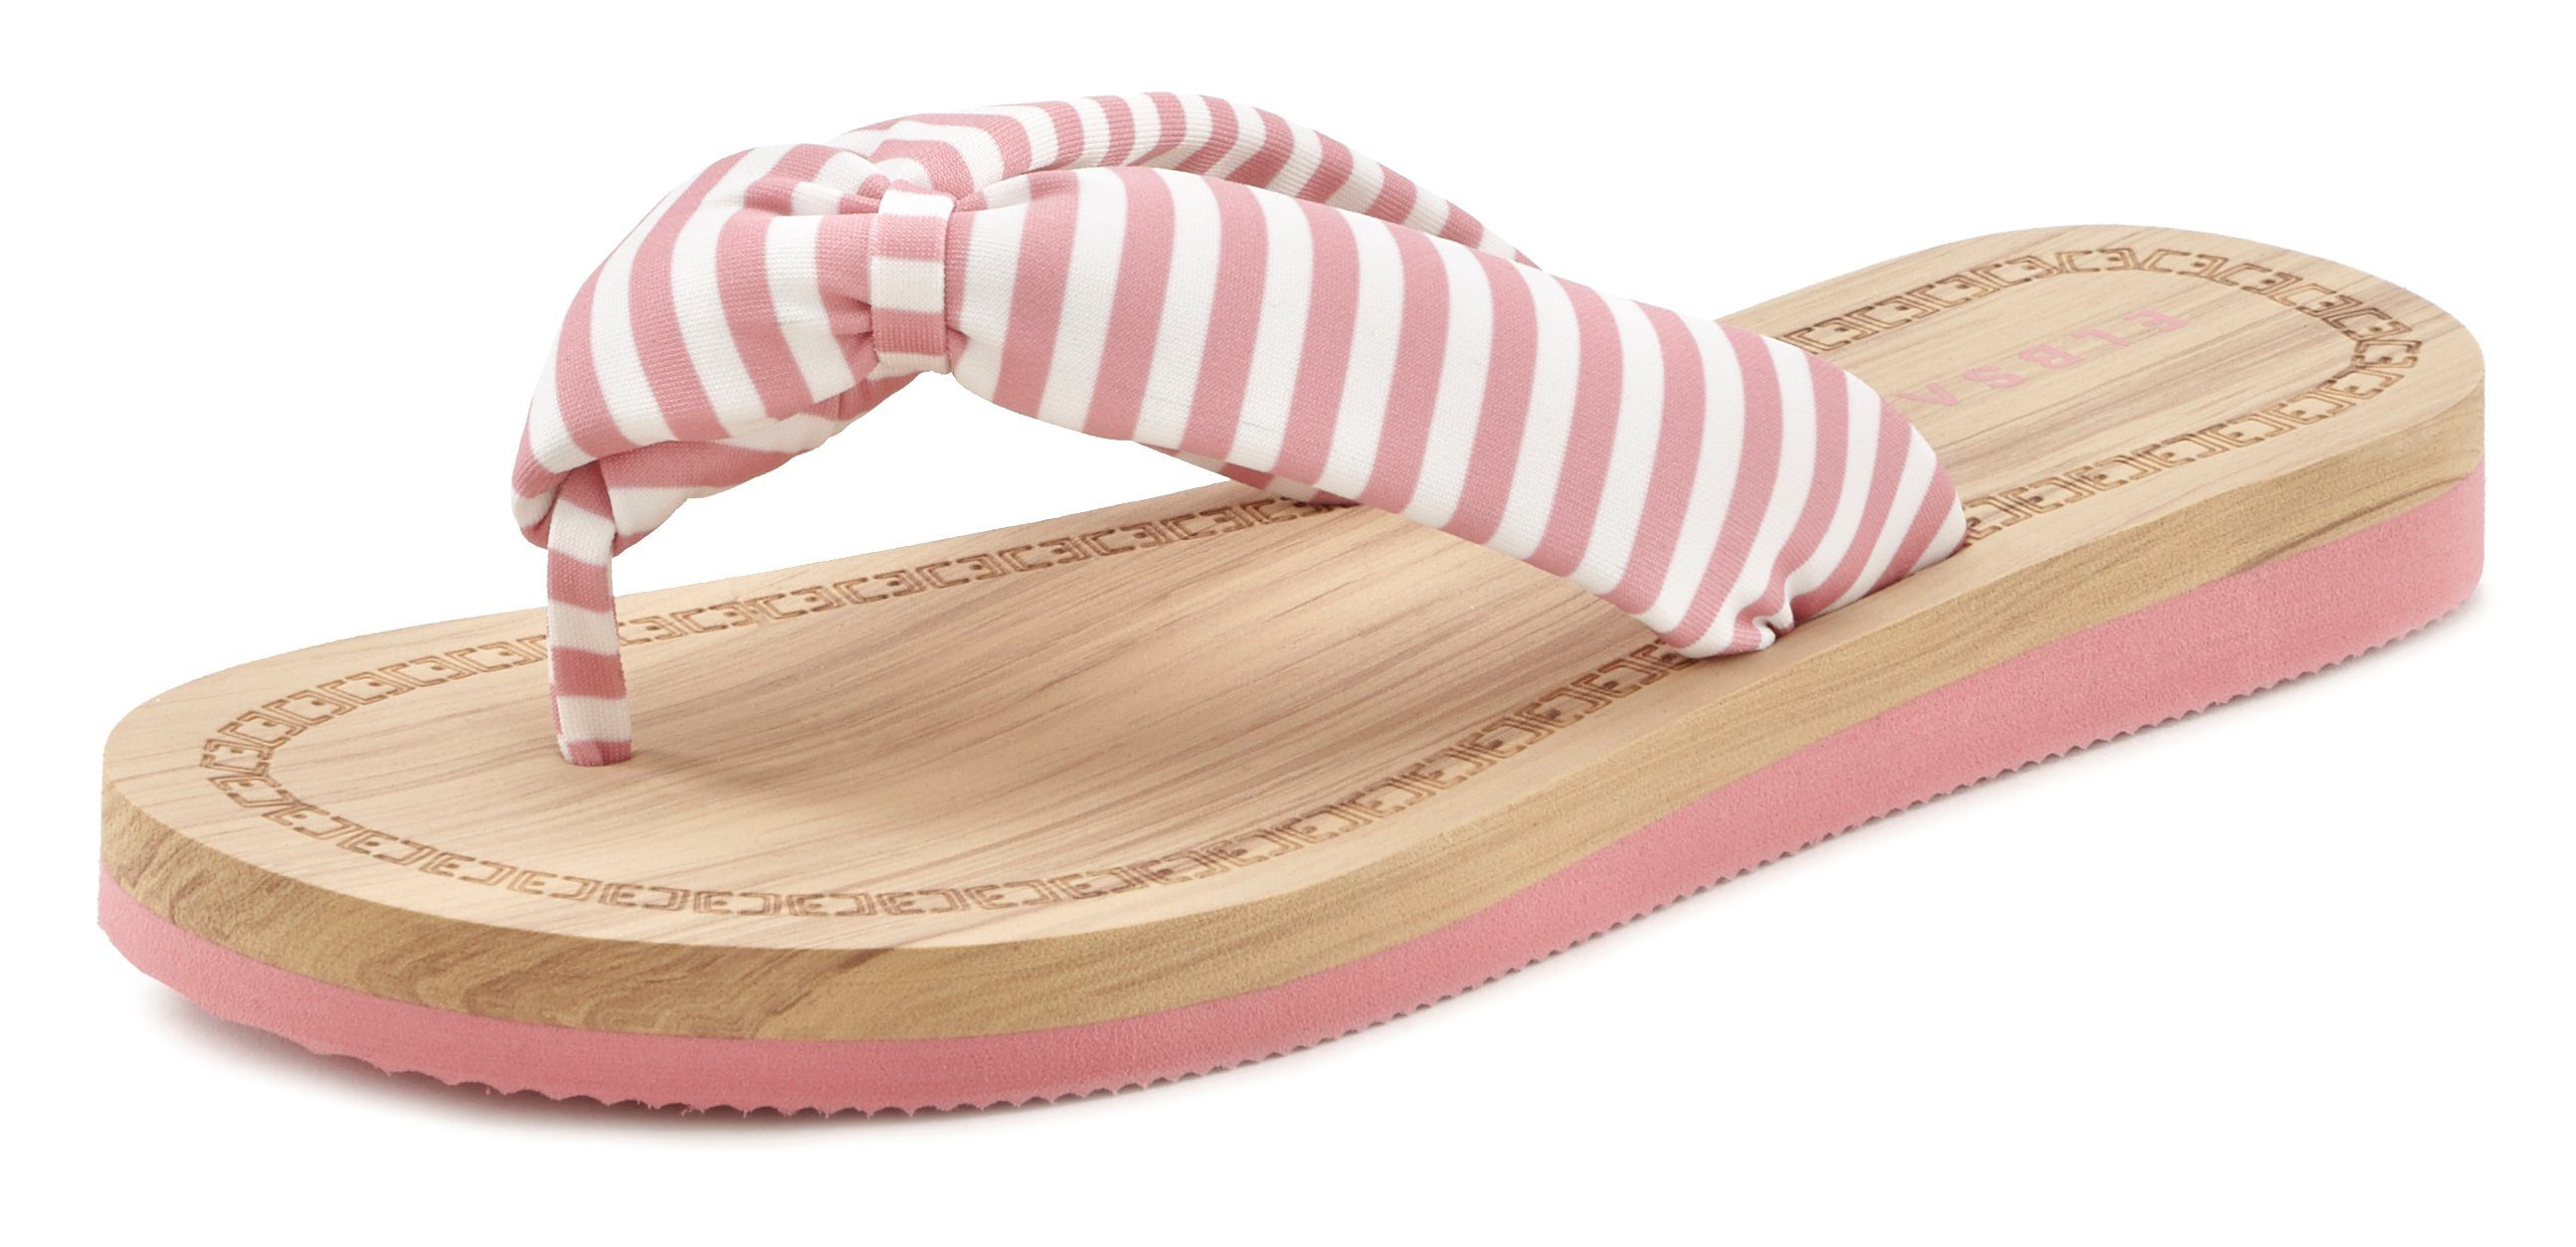 Badeschuh Pantolette, Elbsand VEGAN Sandale, Badezehentrenner rosa-gestreift ultraleicht